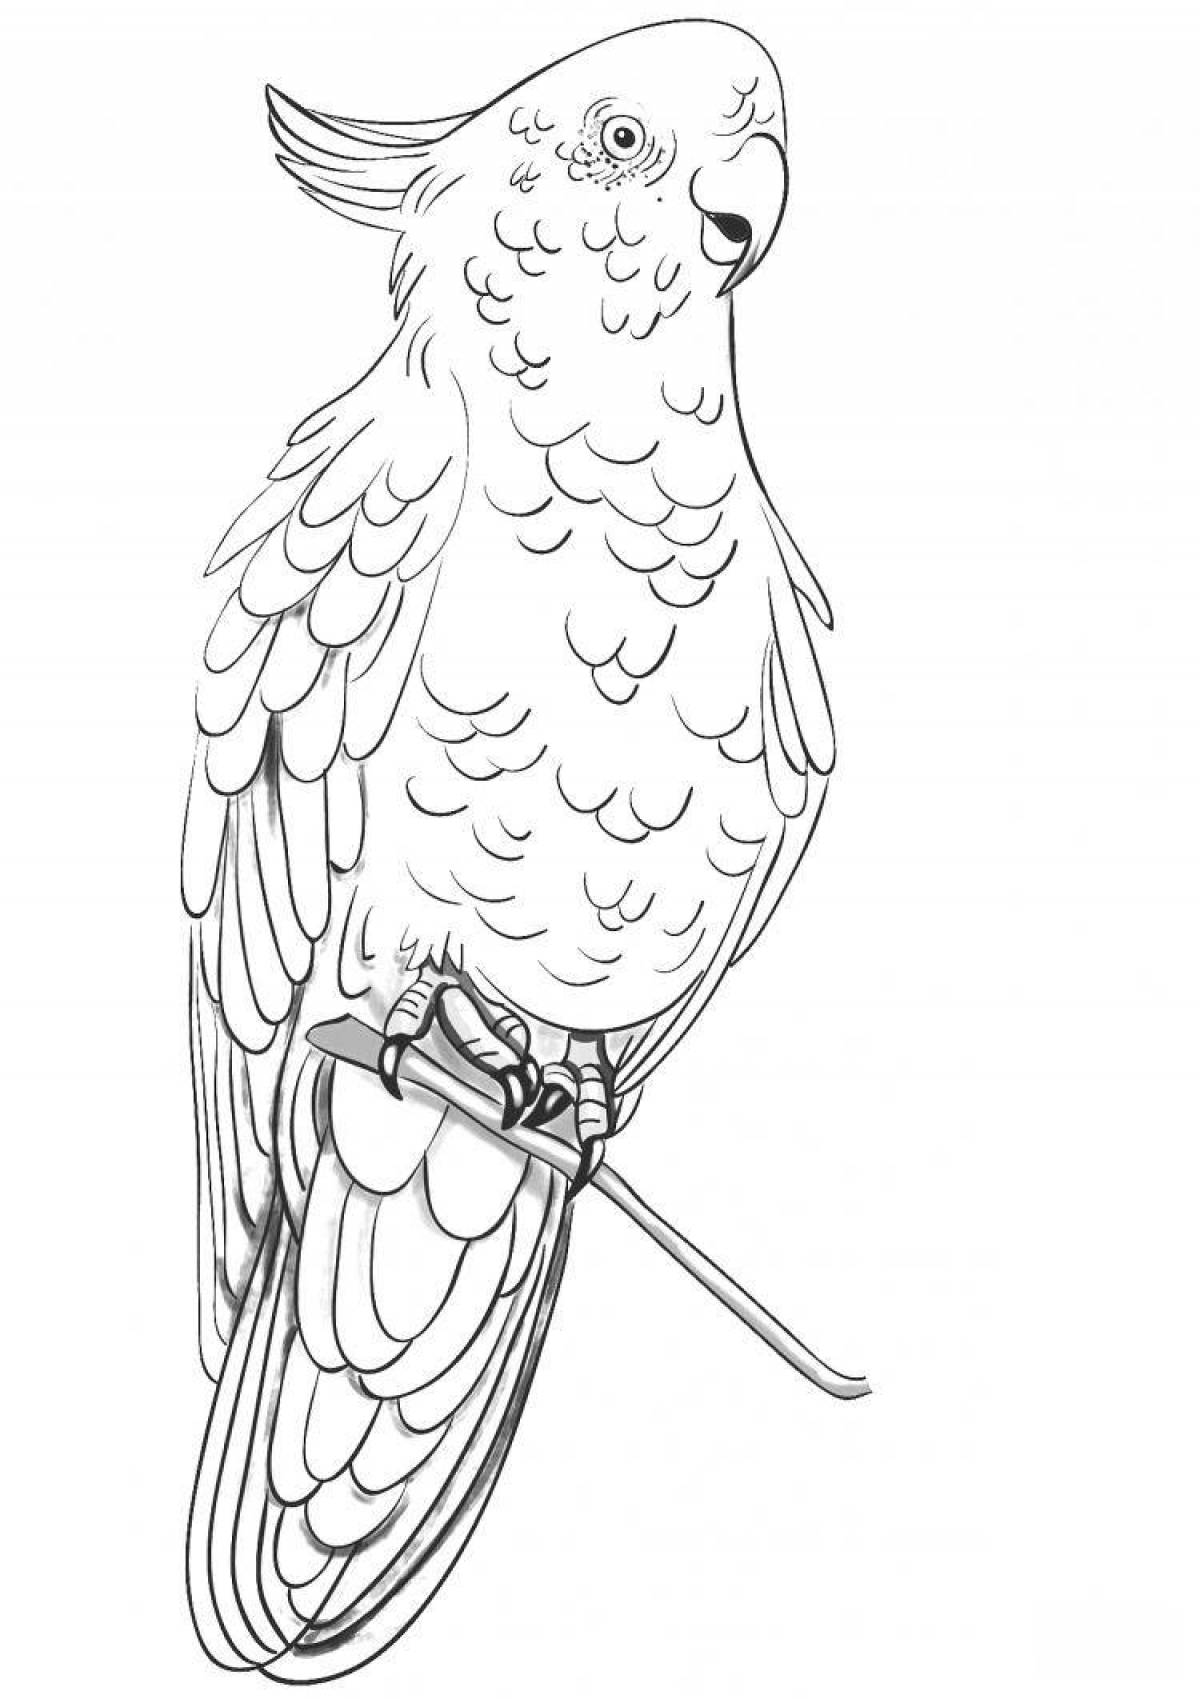 Royal cockatoo coloring page